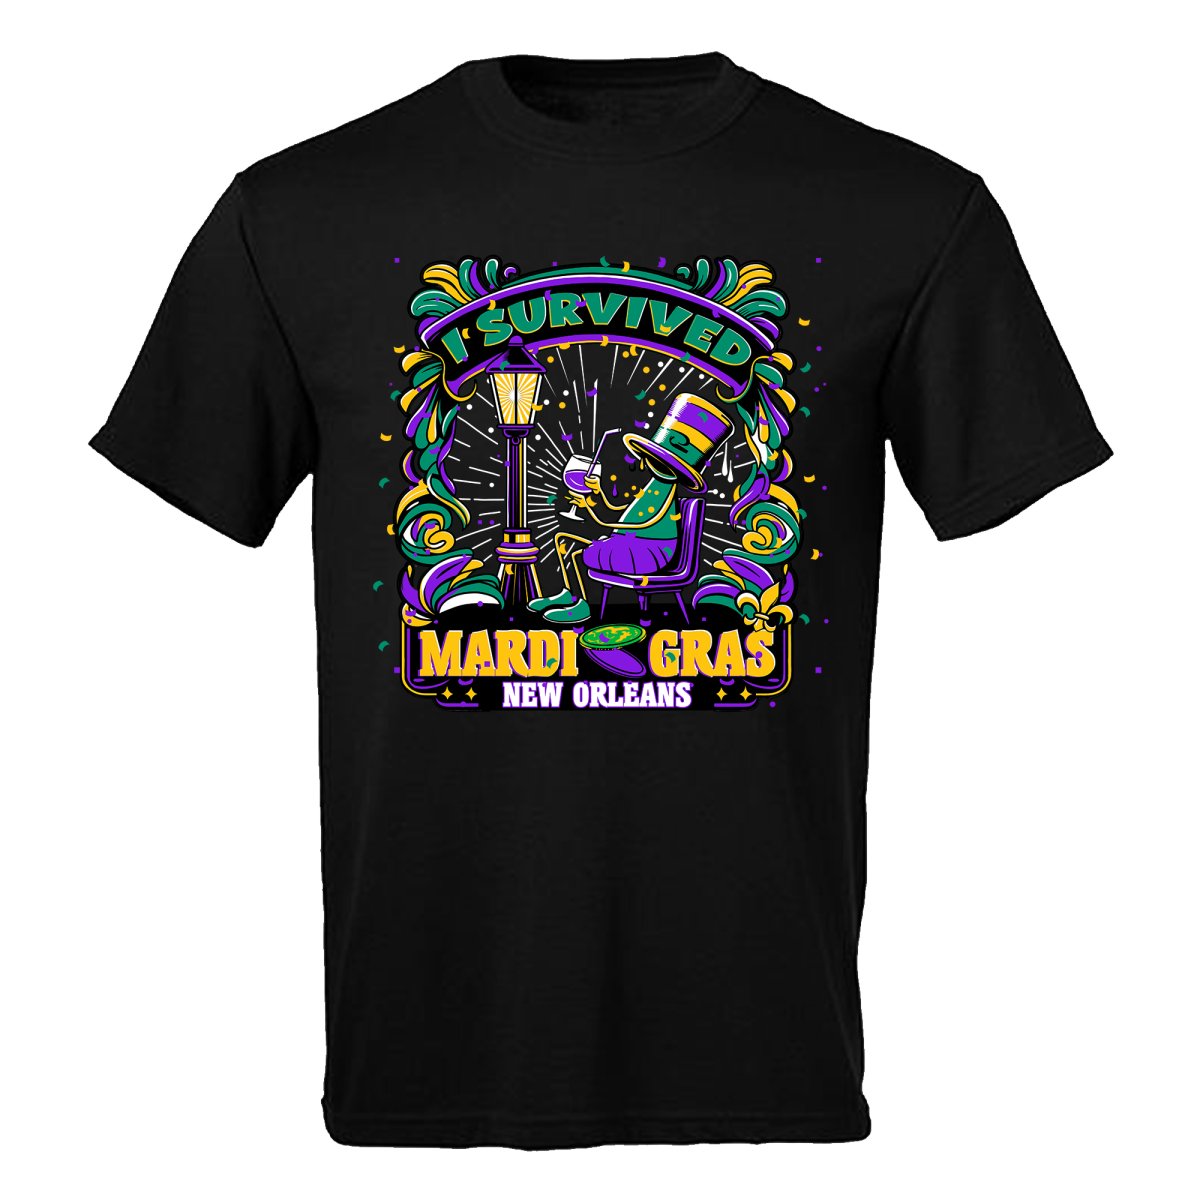 I Survived Mardi Gras Drunk Guy T-shirt Black - Mardi Gras Apparel